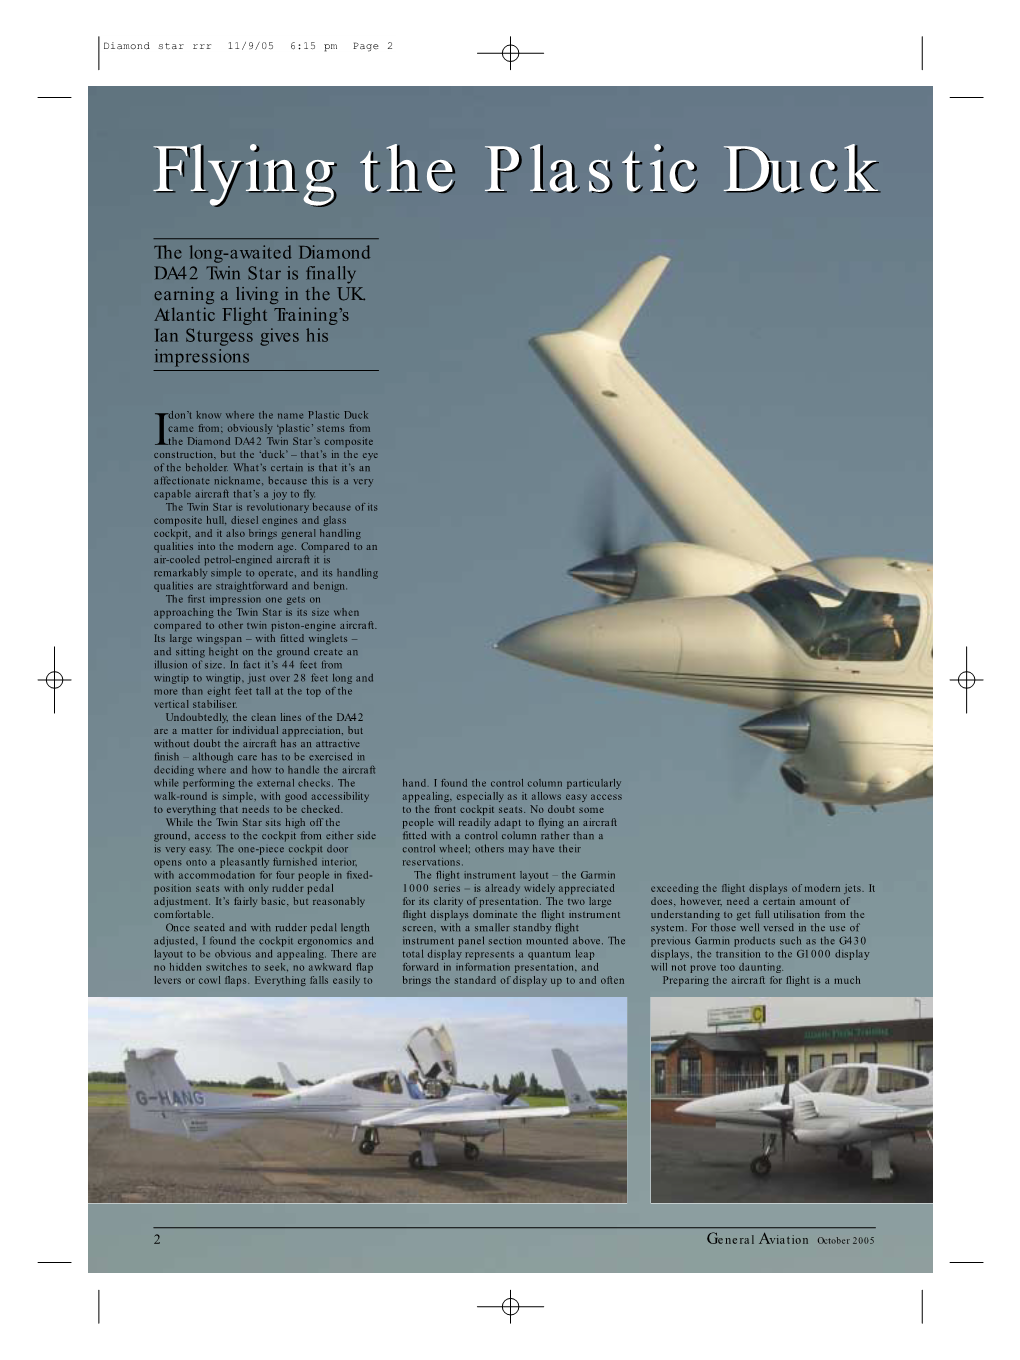 Flying the Plastic Duck (DA42 Twin Star)